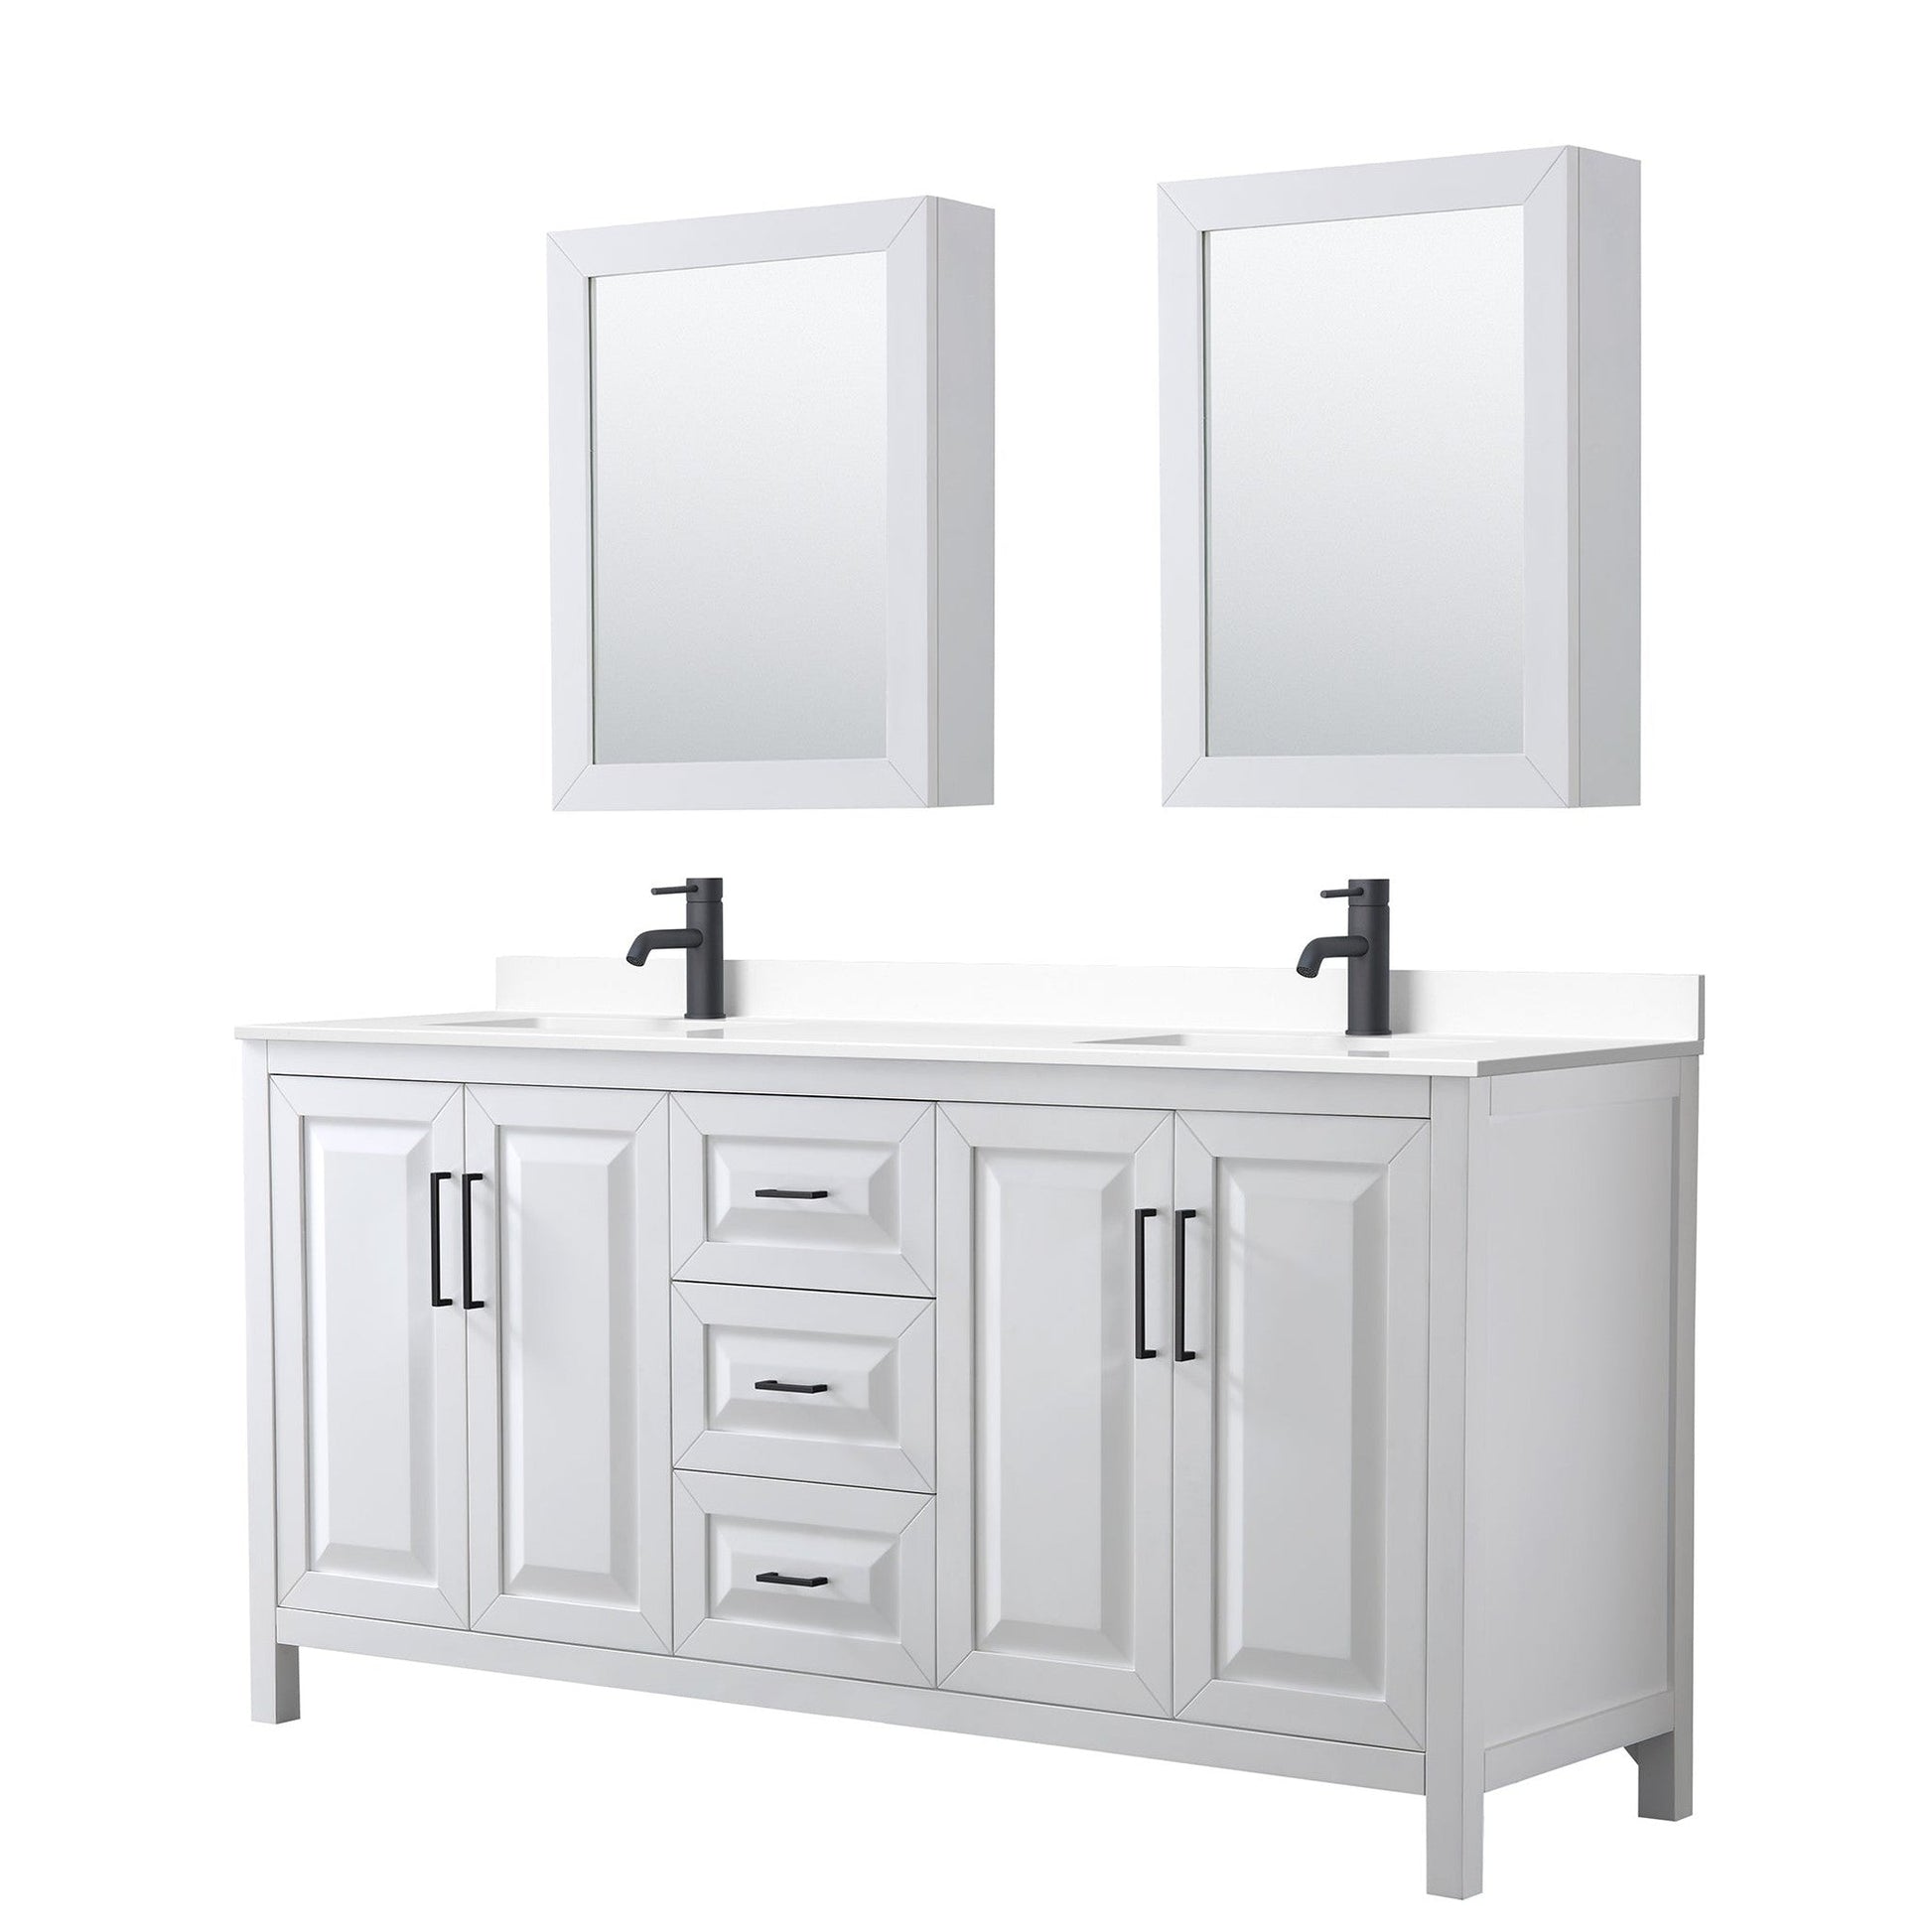 Daria 72" Double Bathroom Vanity in White, White Cultured Marble Countertop, Undermount Square Sinks, Matte Black Trim, Medicine Cabinets